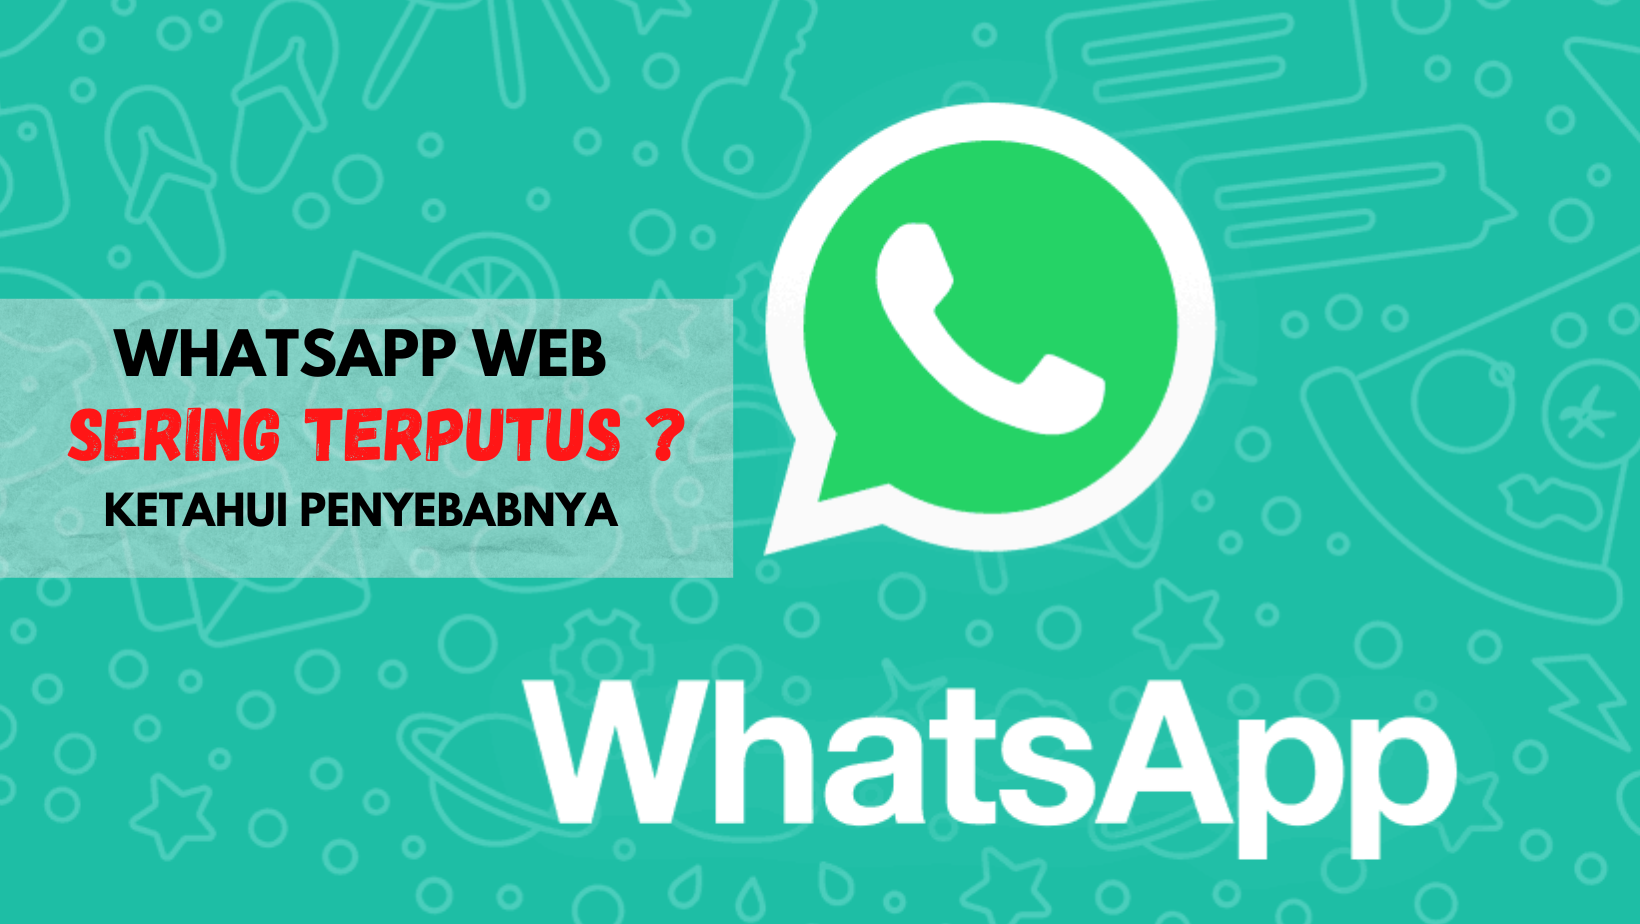 Penyebab WhatApp Web Terputus